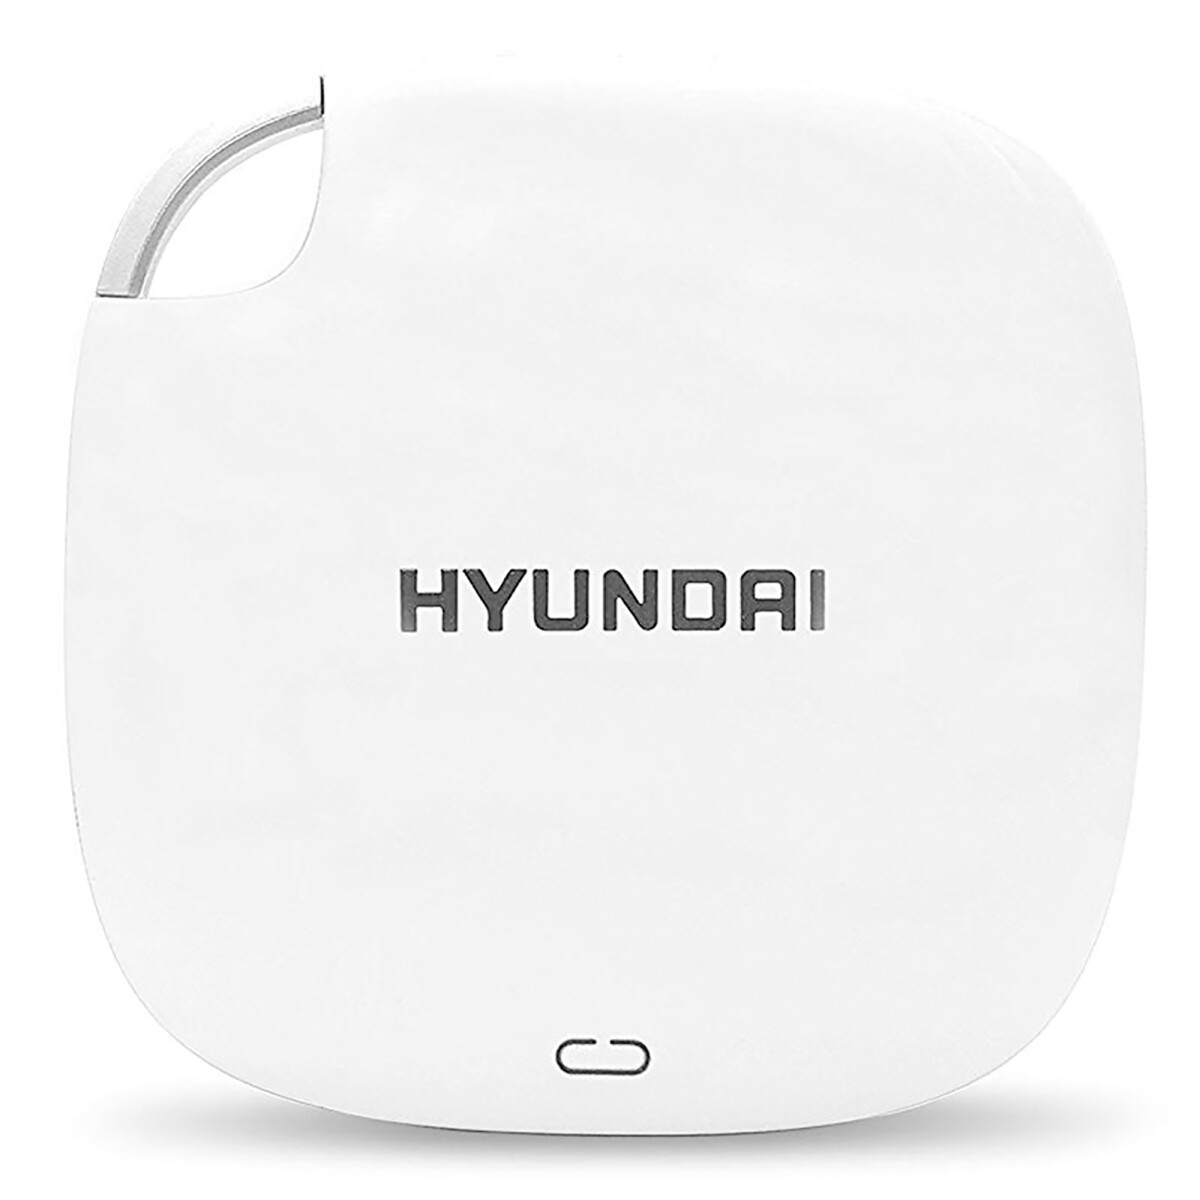 Hyundai - Disco Sólido Externo HTESD250PB - 250GB. USB C 3.1. 450 Mb/s Lectura / 400 Mb/s Escritura. - 001 